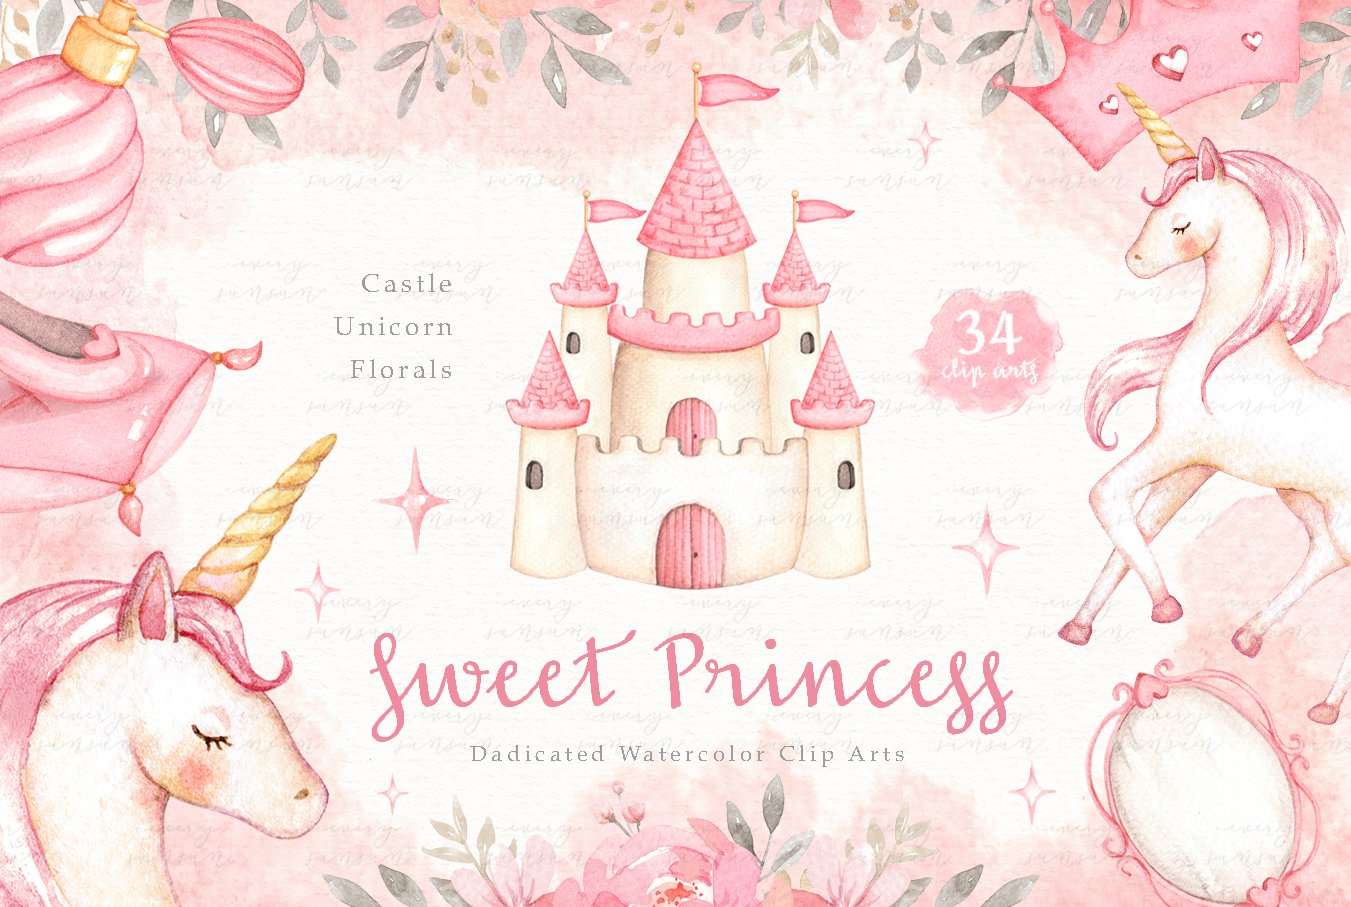 Sweet Princess Watercolor Clip Arts cover image.